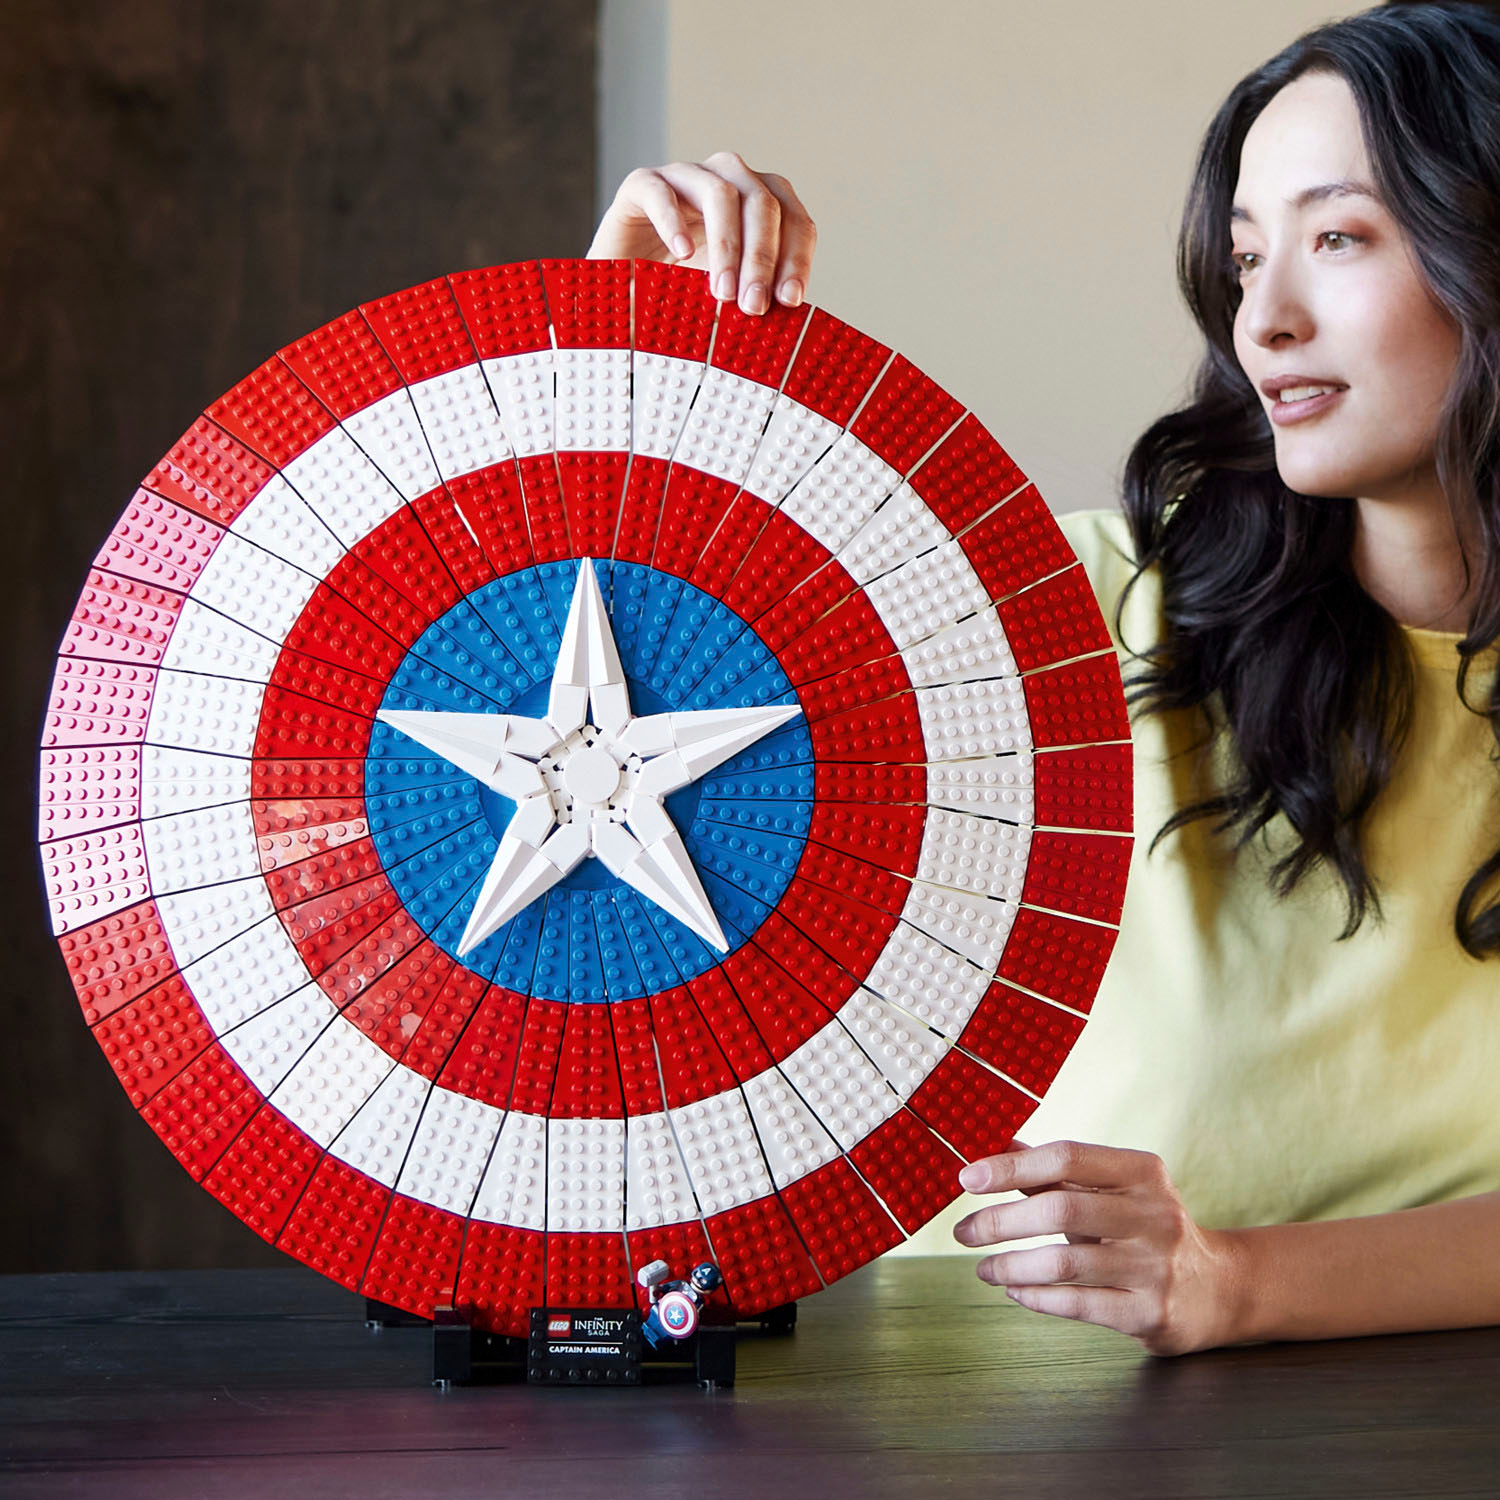 LEGO Marvel Captain America's Shield 76262 6427756 - Best Buy